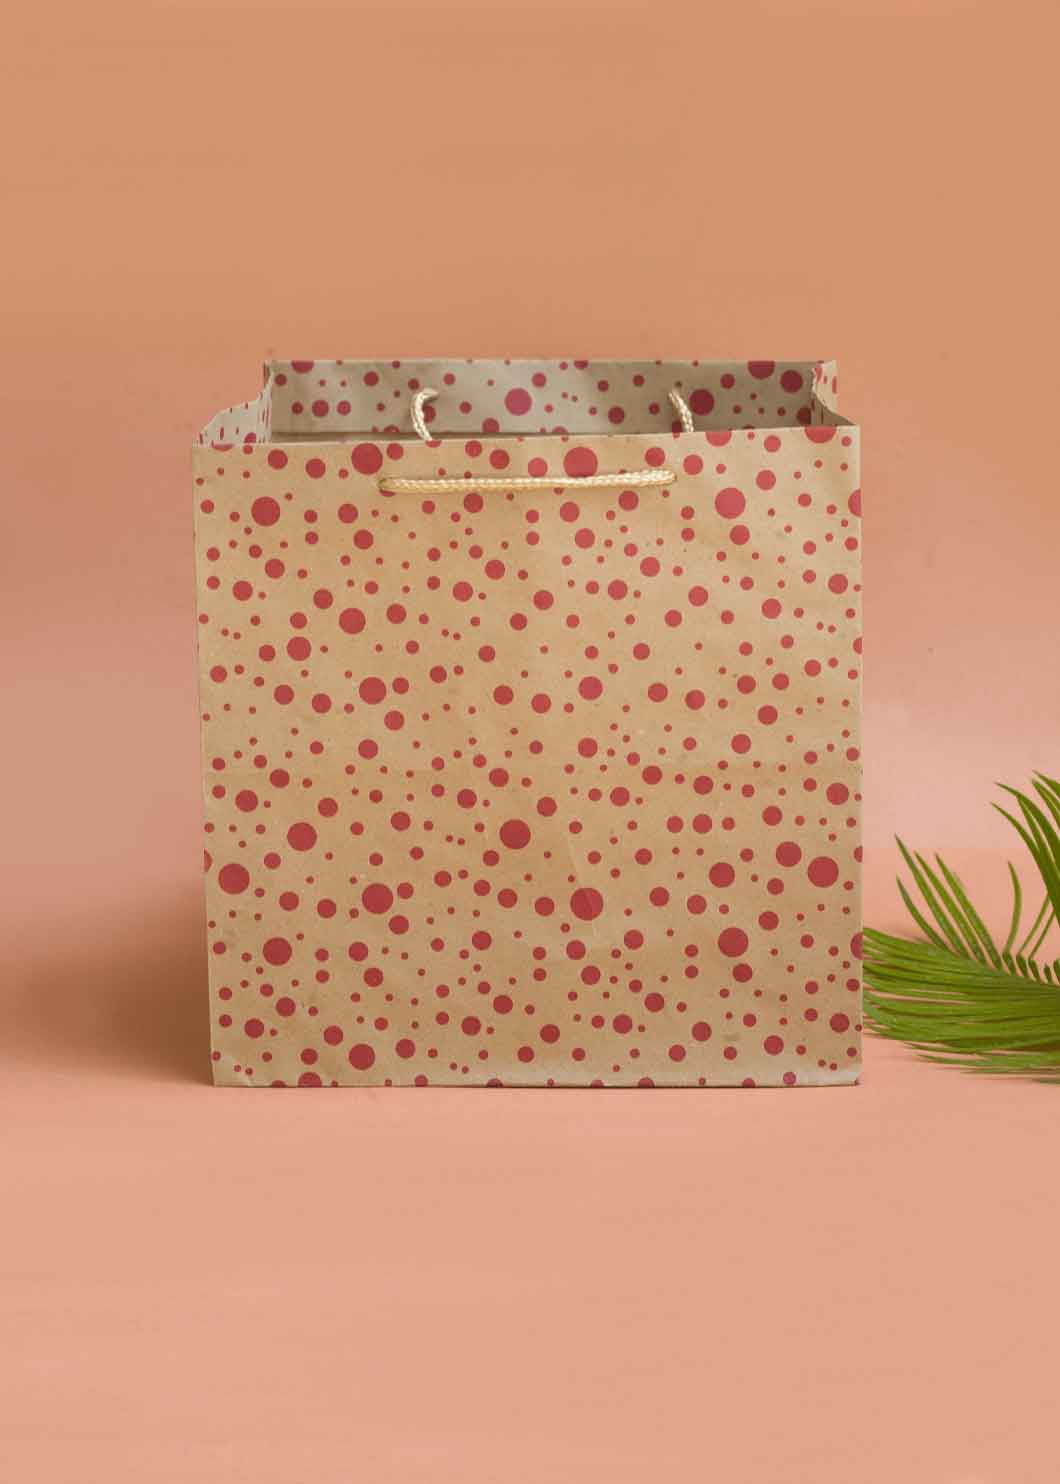 Craft Paper Bag - Dotted Pattern Design Square Paper Bag For Multupupose Packaging